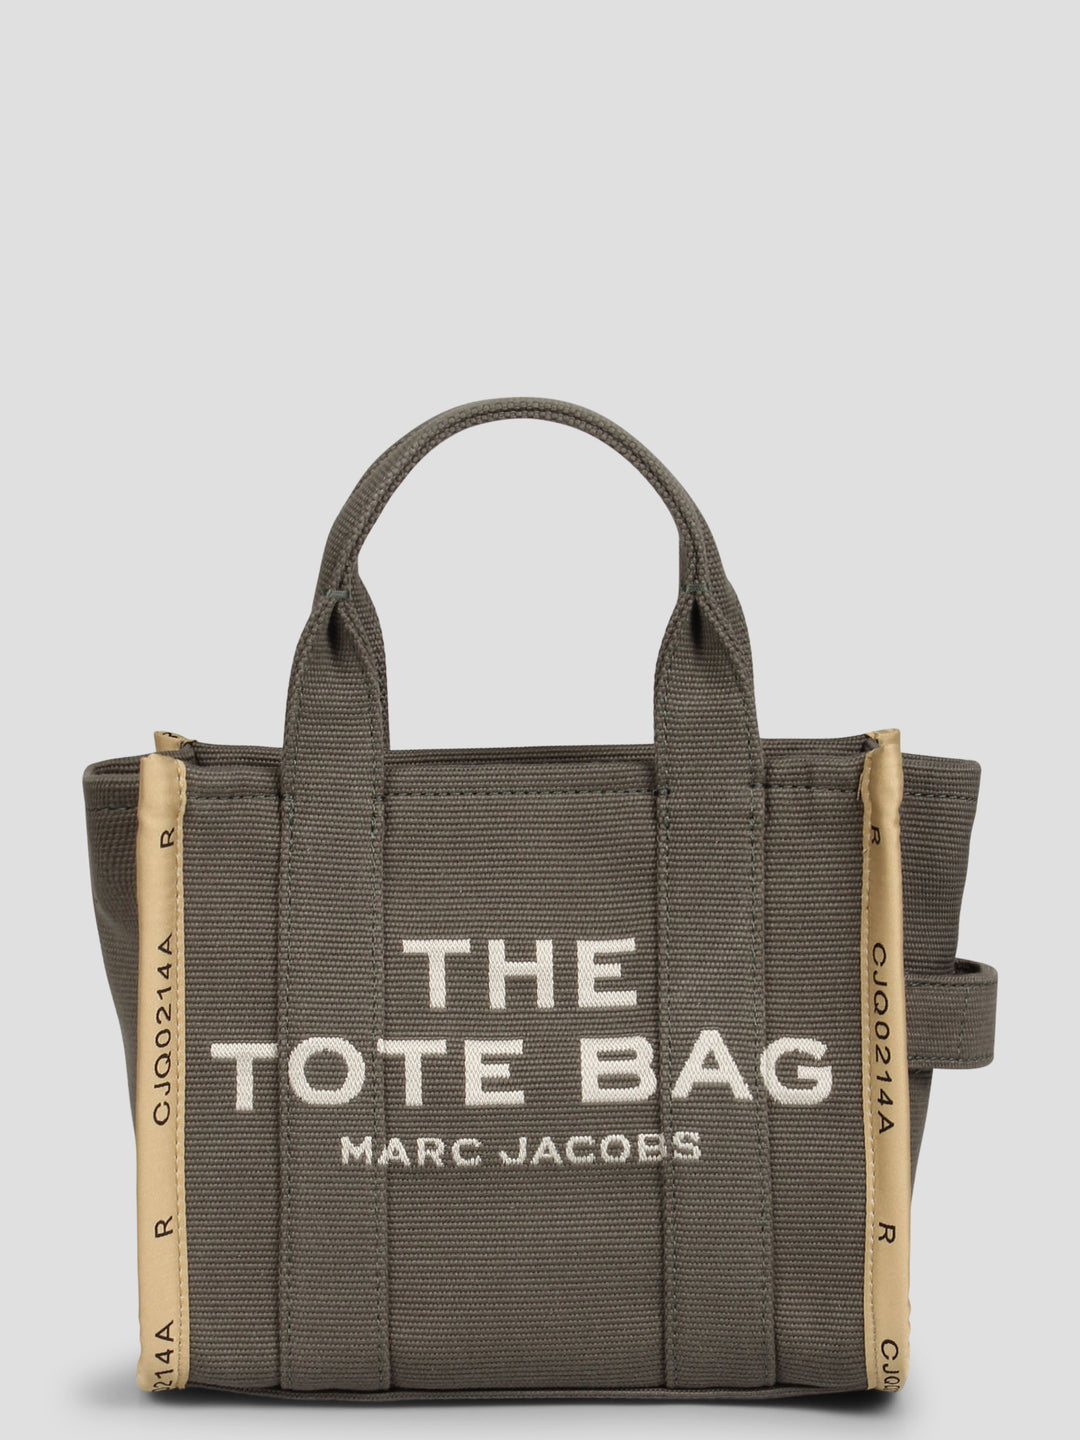 The jacquard medium tote bag